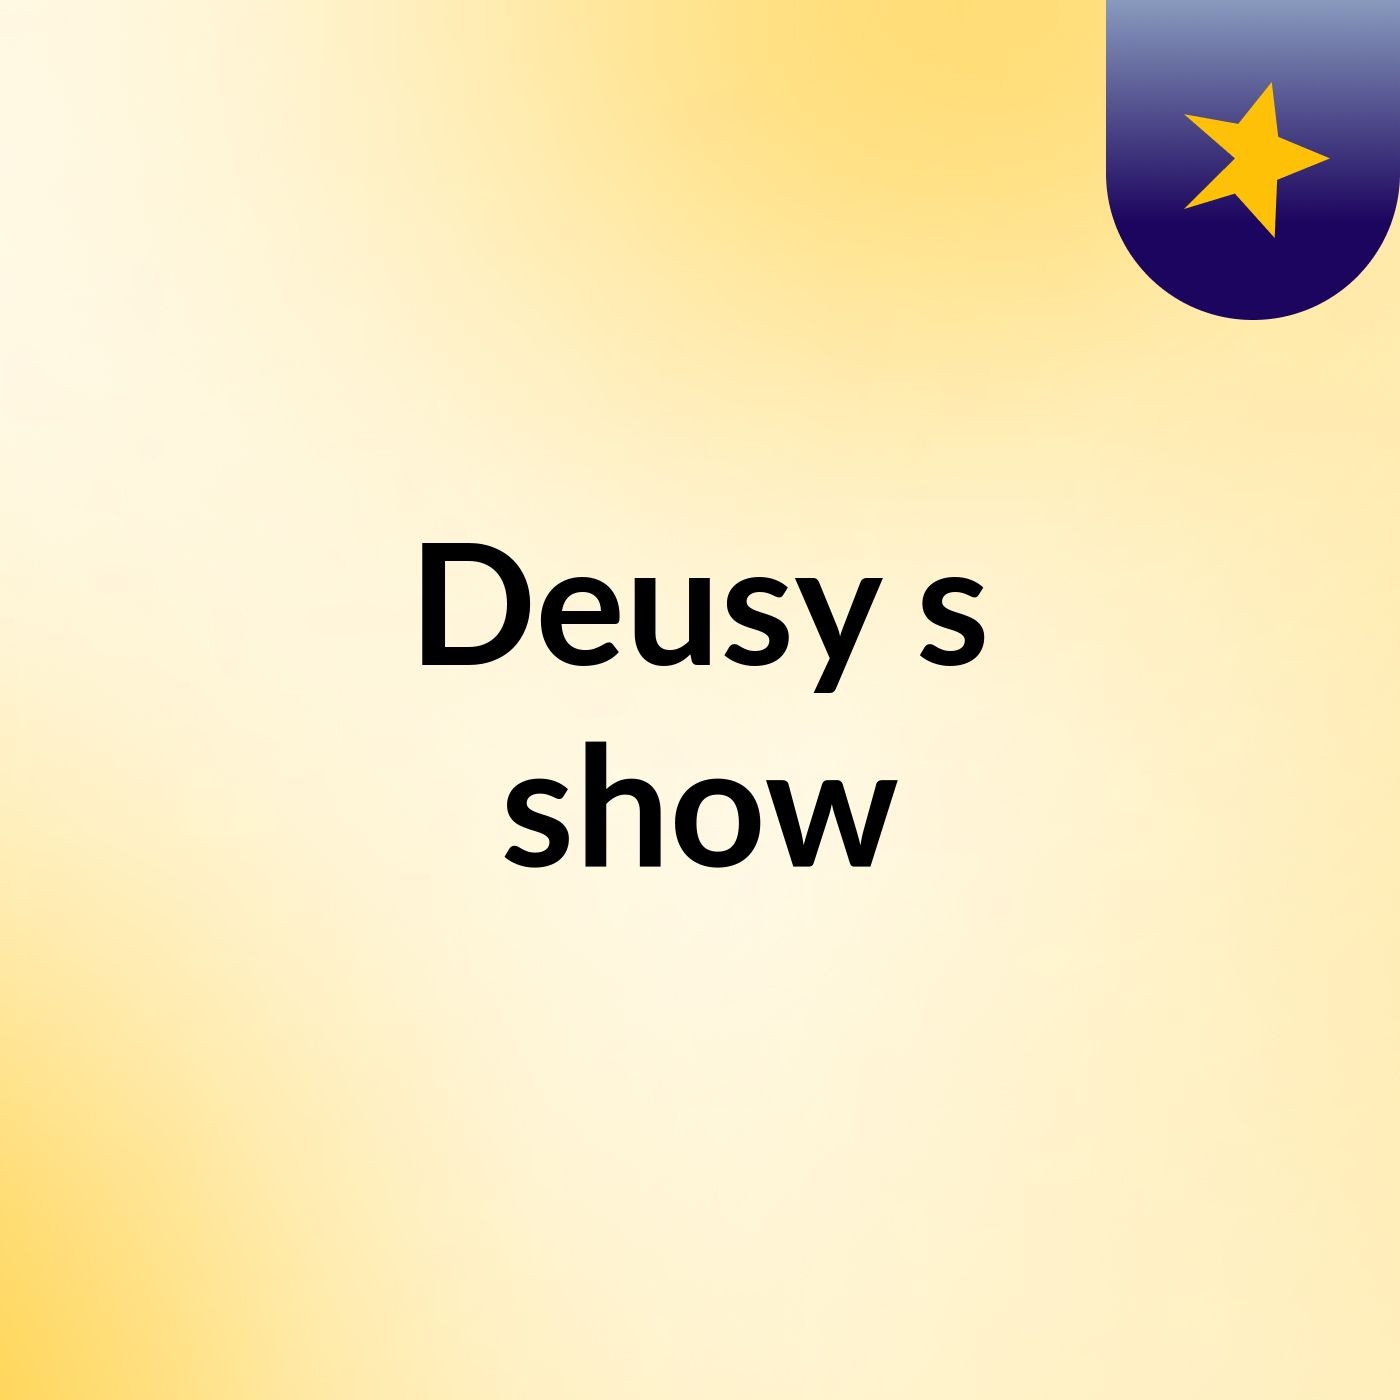 Deusy's show